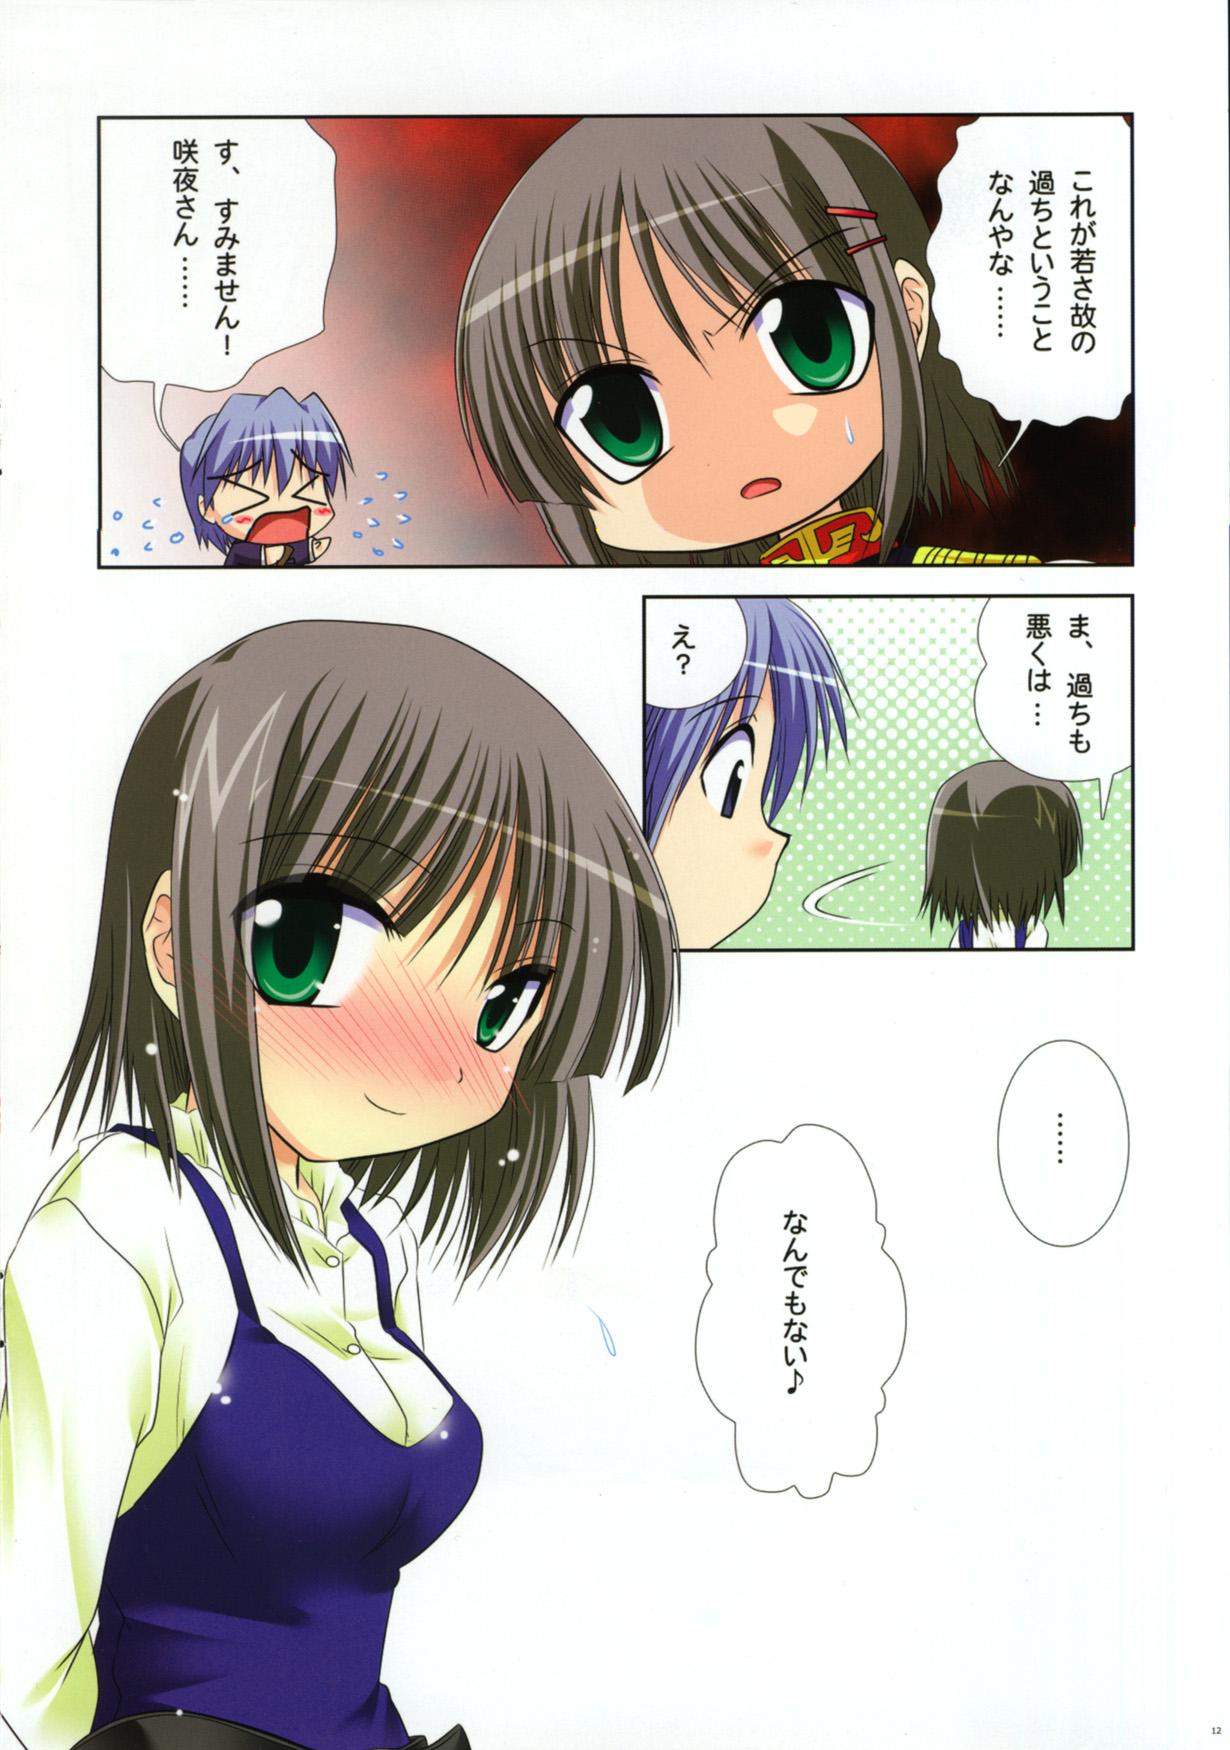 Hidden Camera Purimo #3 - Hayate no gotoku Newbie - Page 12